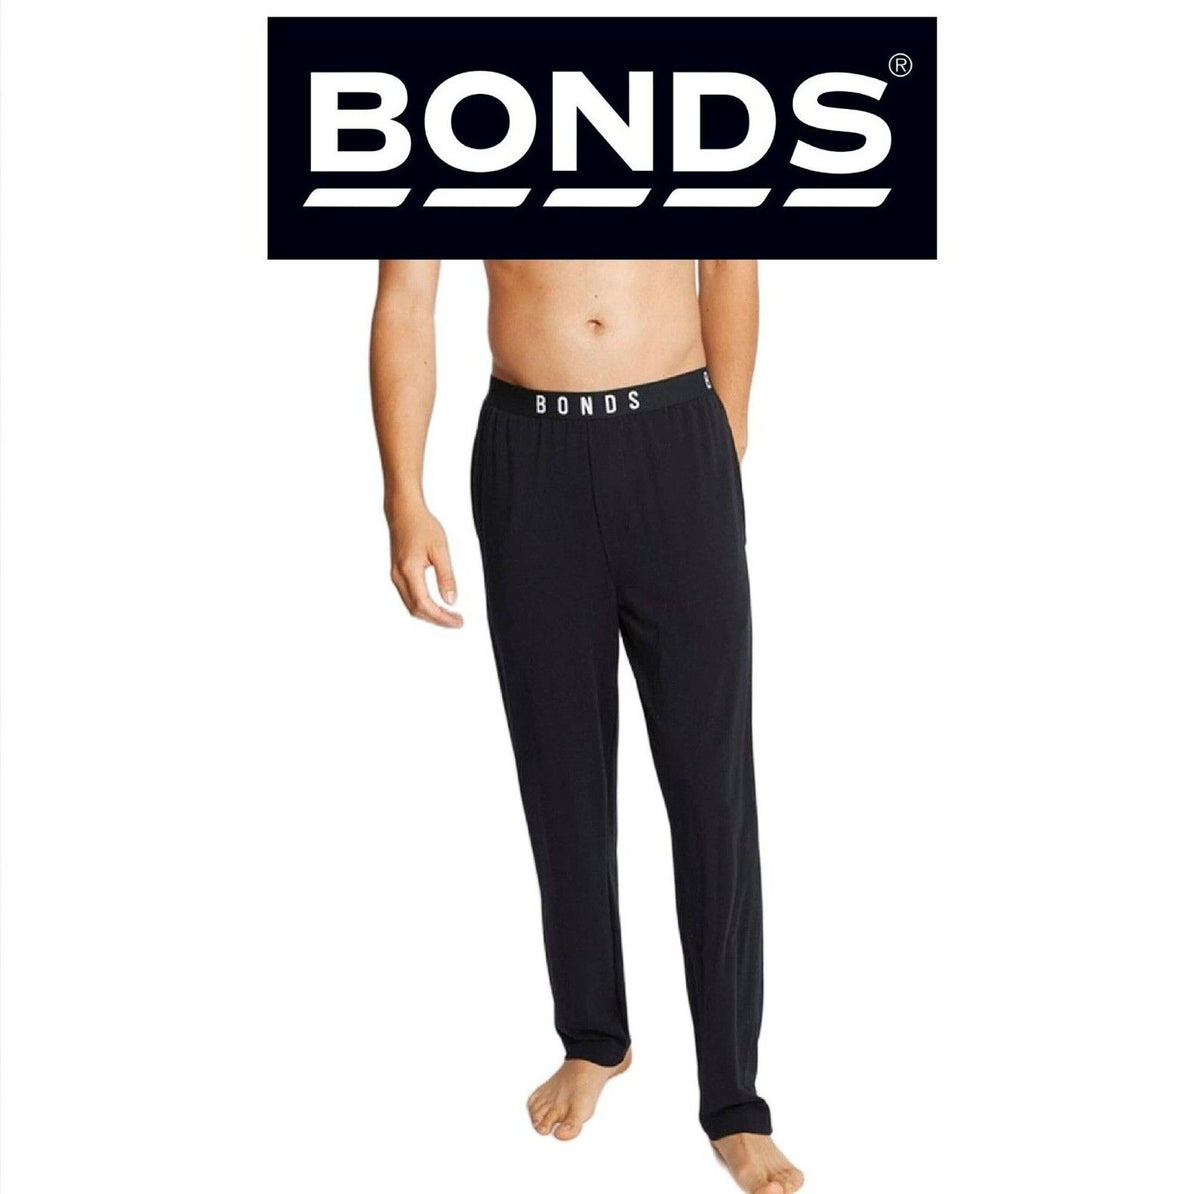 Bonds Mens Comfy Livin Jersey Pant Soft Stretchable Elastic Waist MXM9A